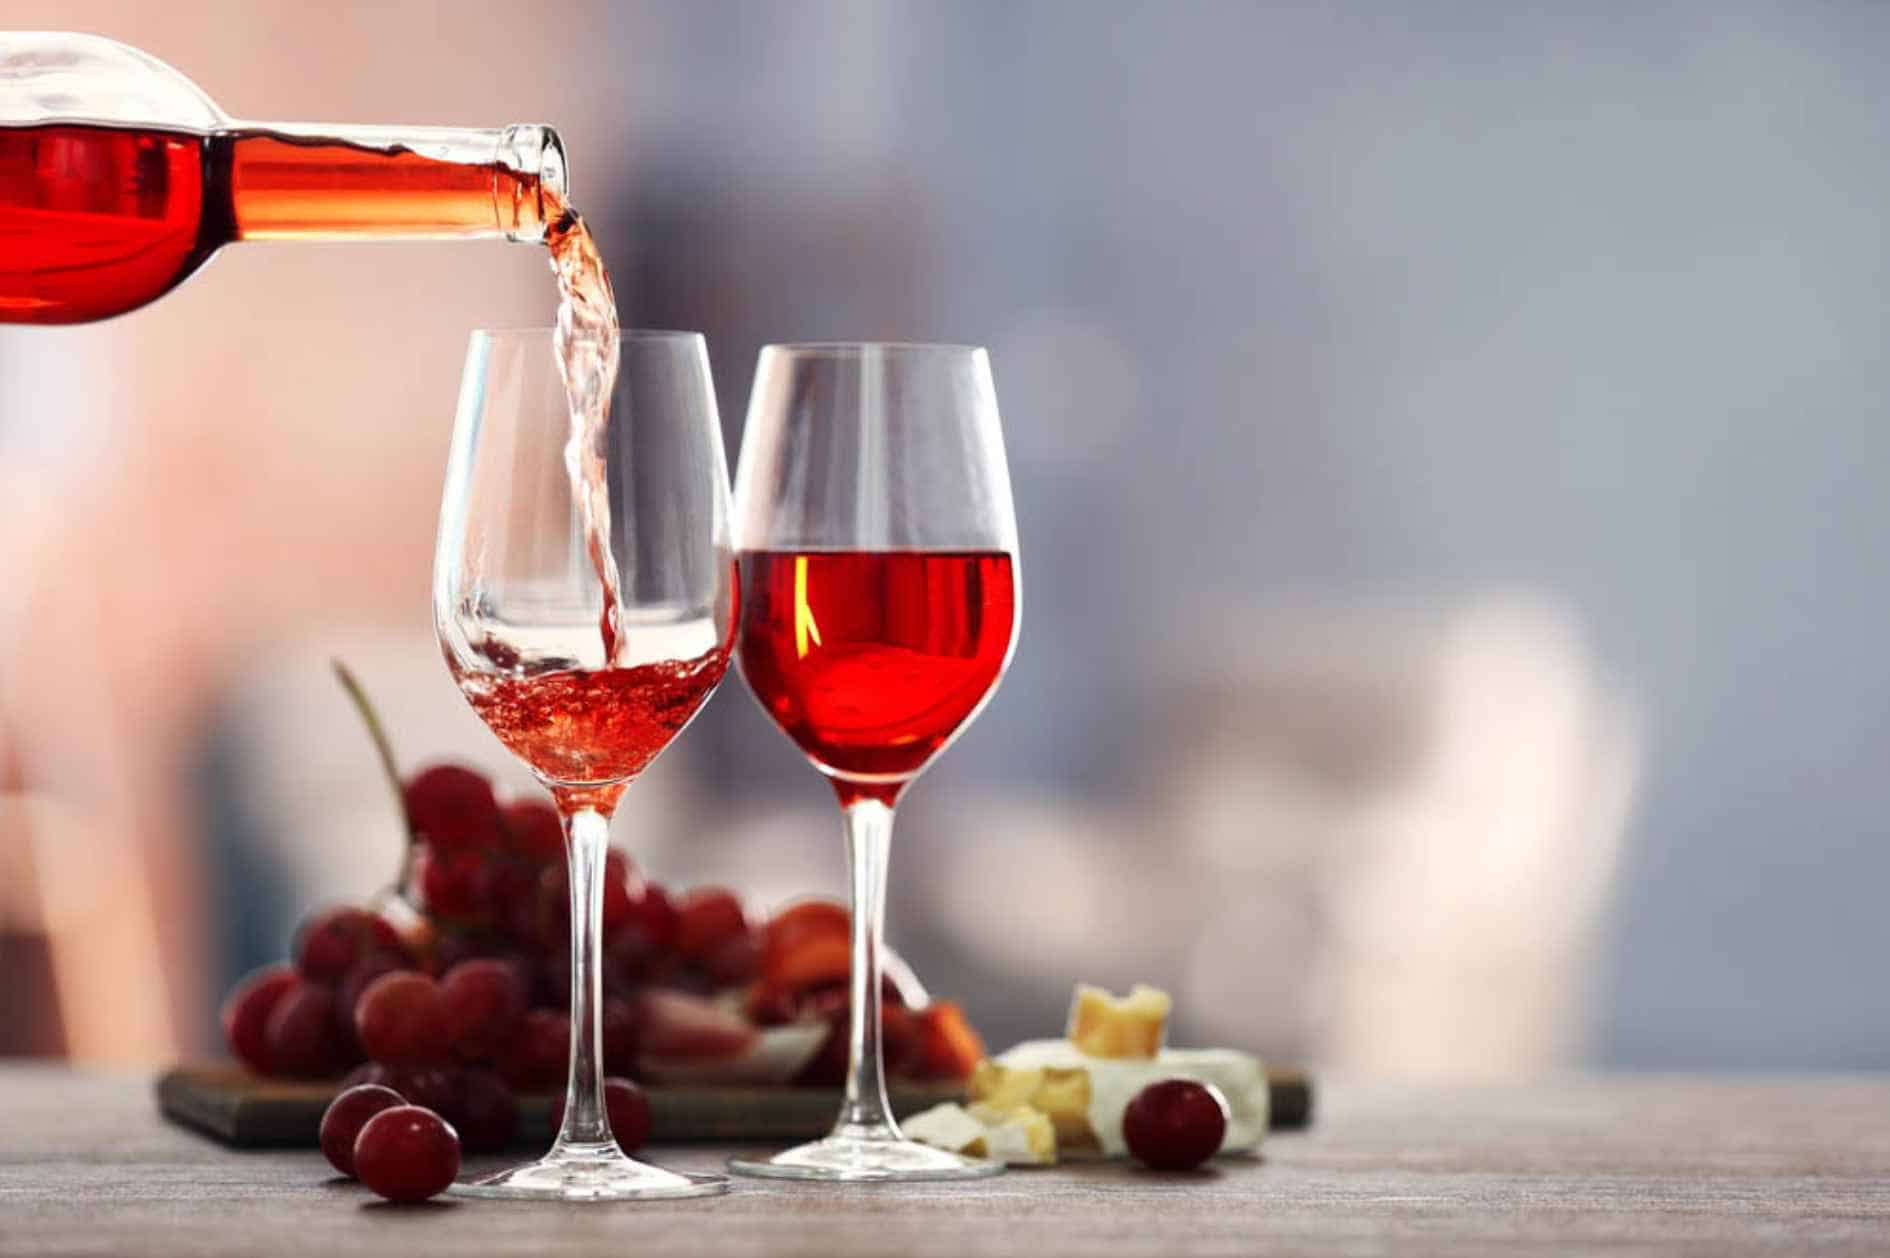 Blush Wine 101: Types, Characteristics, Benefits & Food Pairing